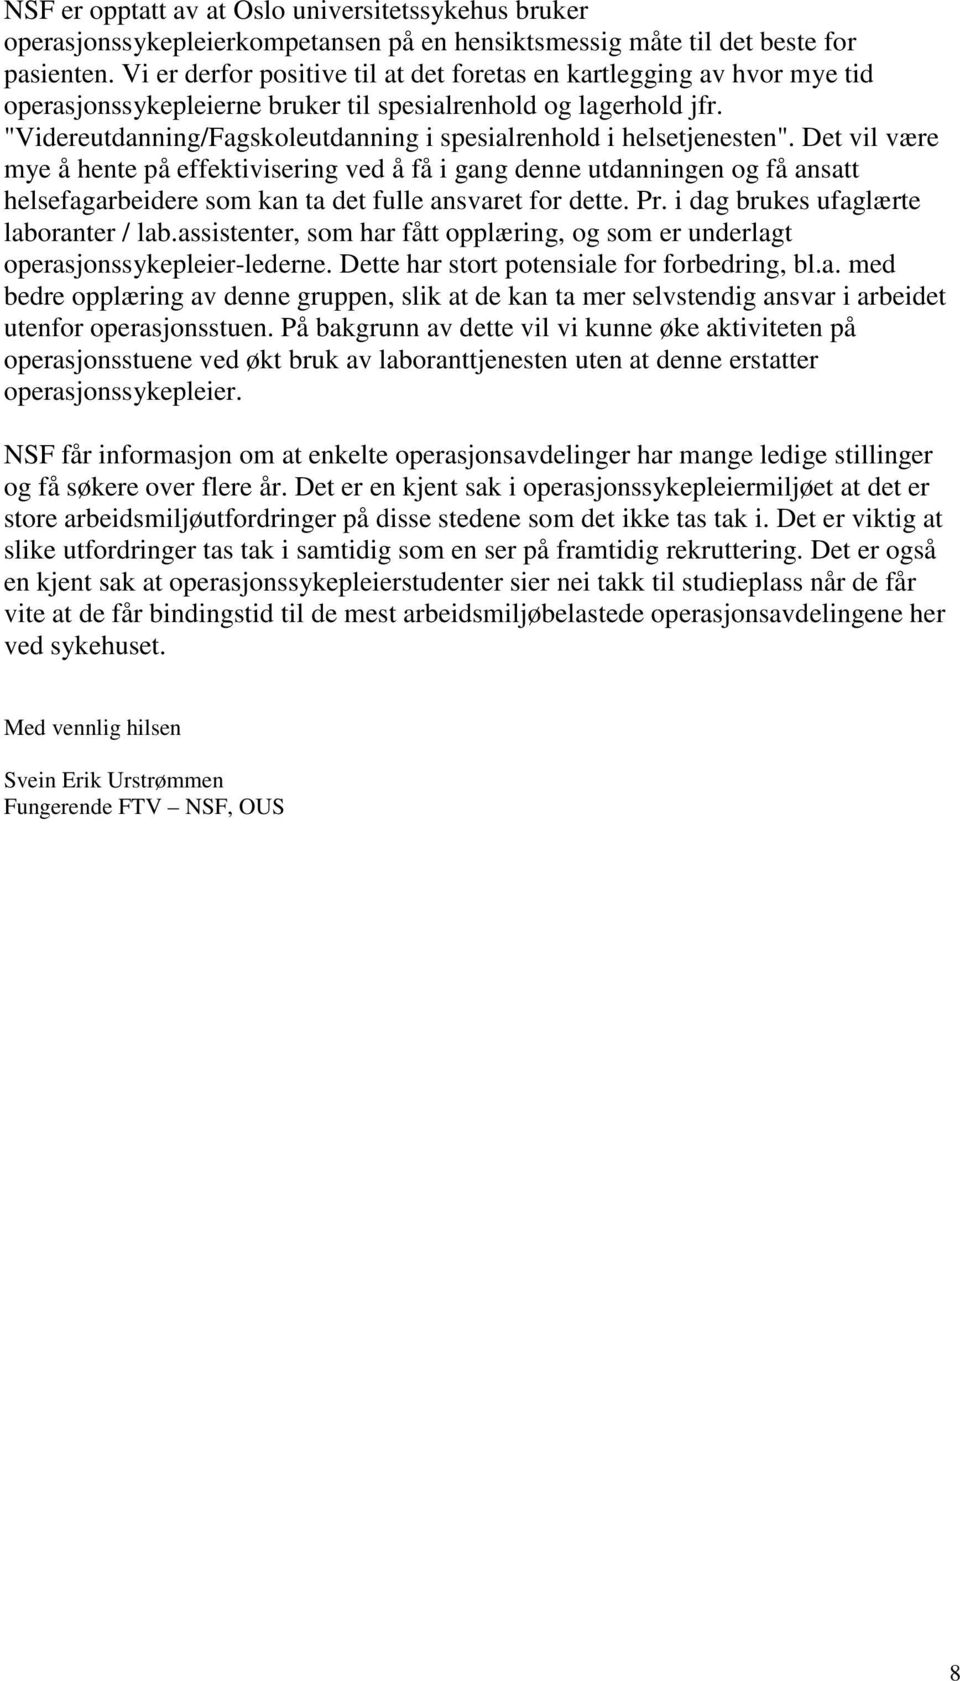 "Videreutdanning/Fagskoleutdanning i spesialrenhold i helsetjenesten".